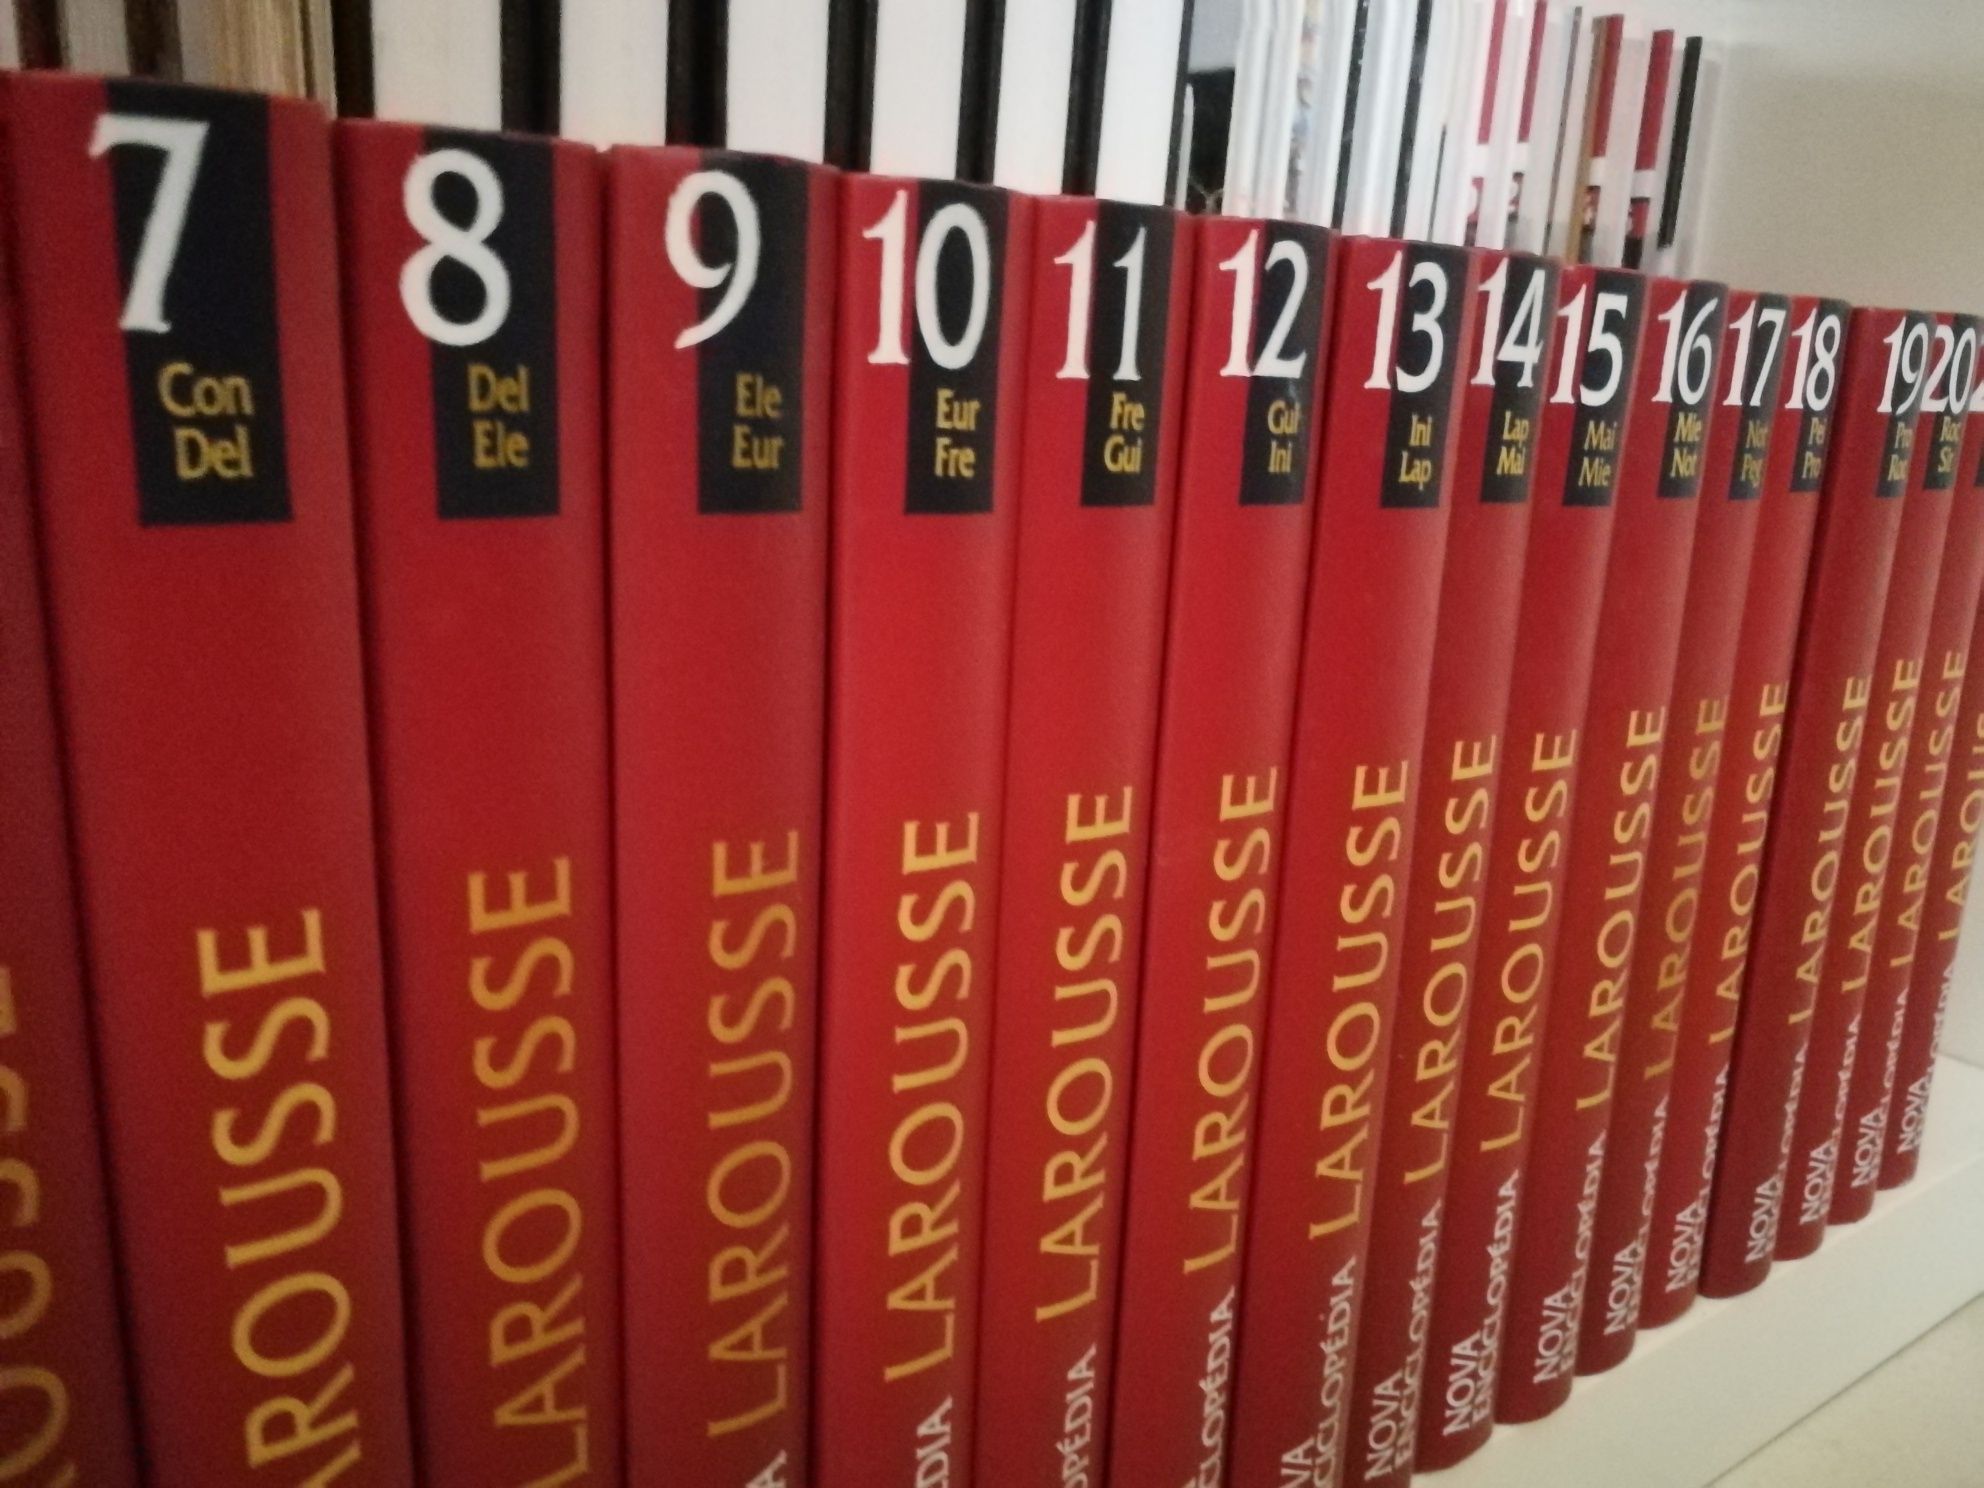 Nova Enciclopédia La Rousse, constituída por 22 volumes